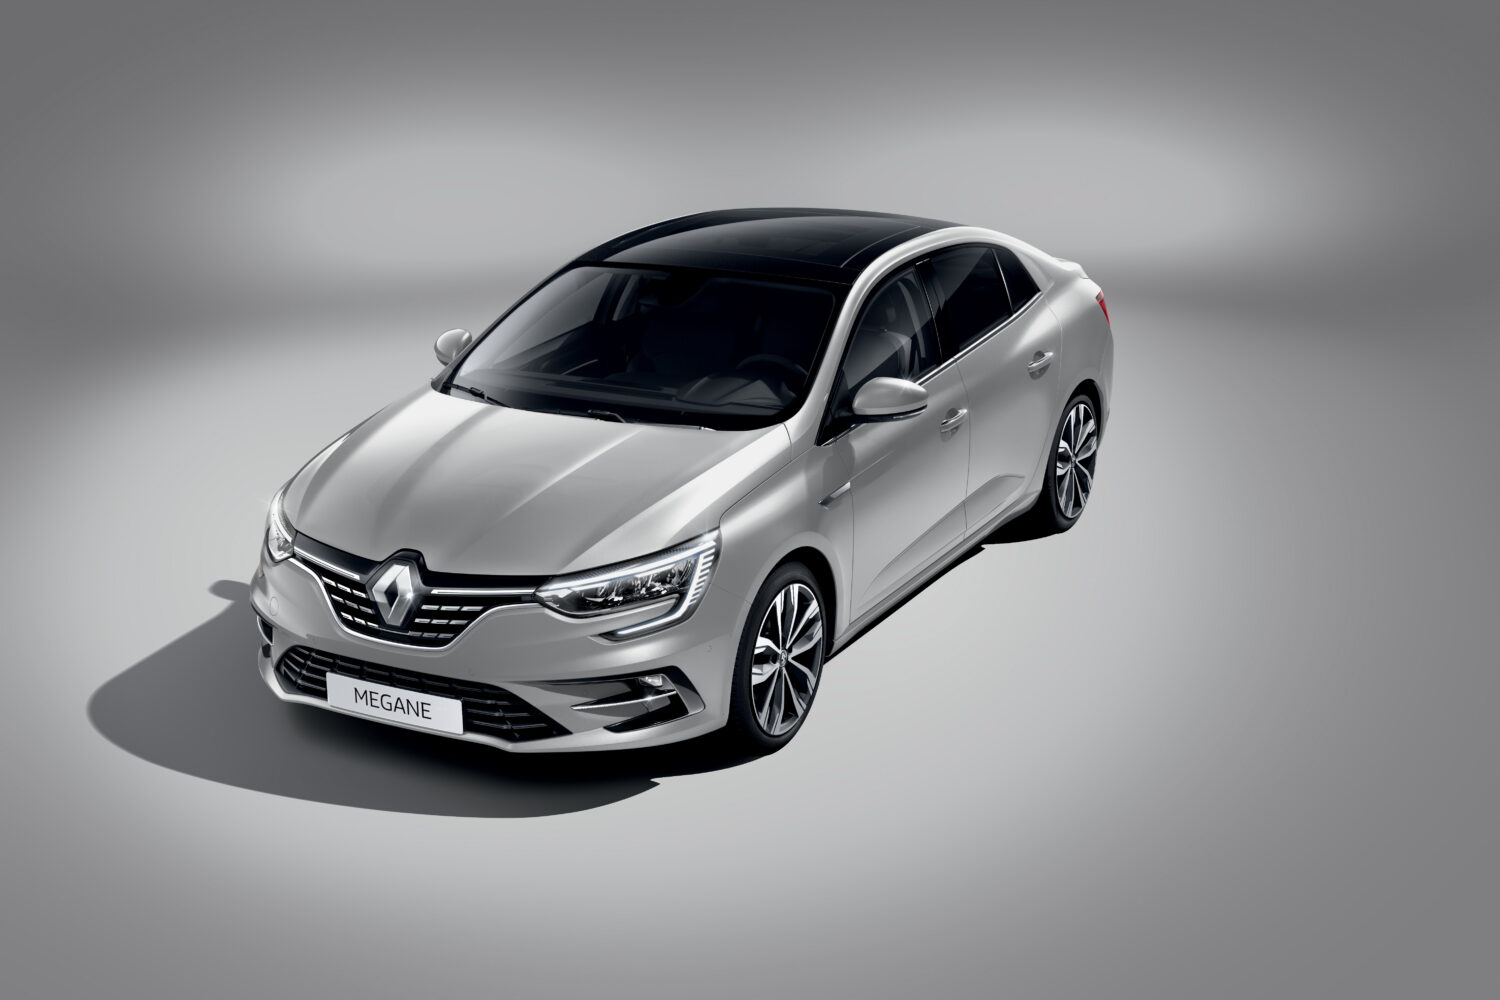 2020 - Nouvelle Renault MEGANE SEDAN